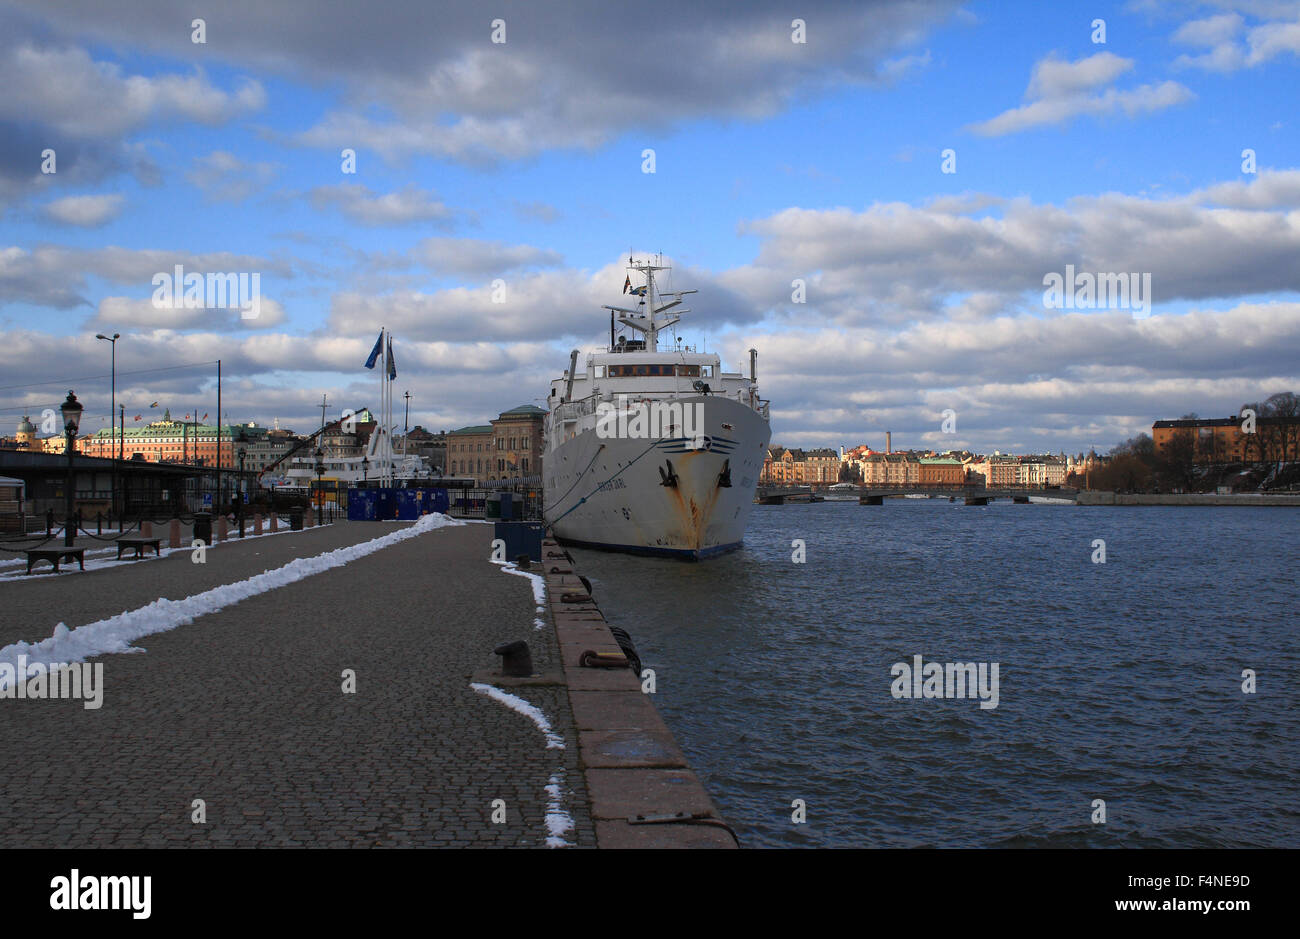 View from the quay of Skeppsbrokajen in central Stockholm, Sweden. Stock Photo